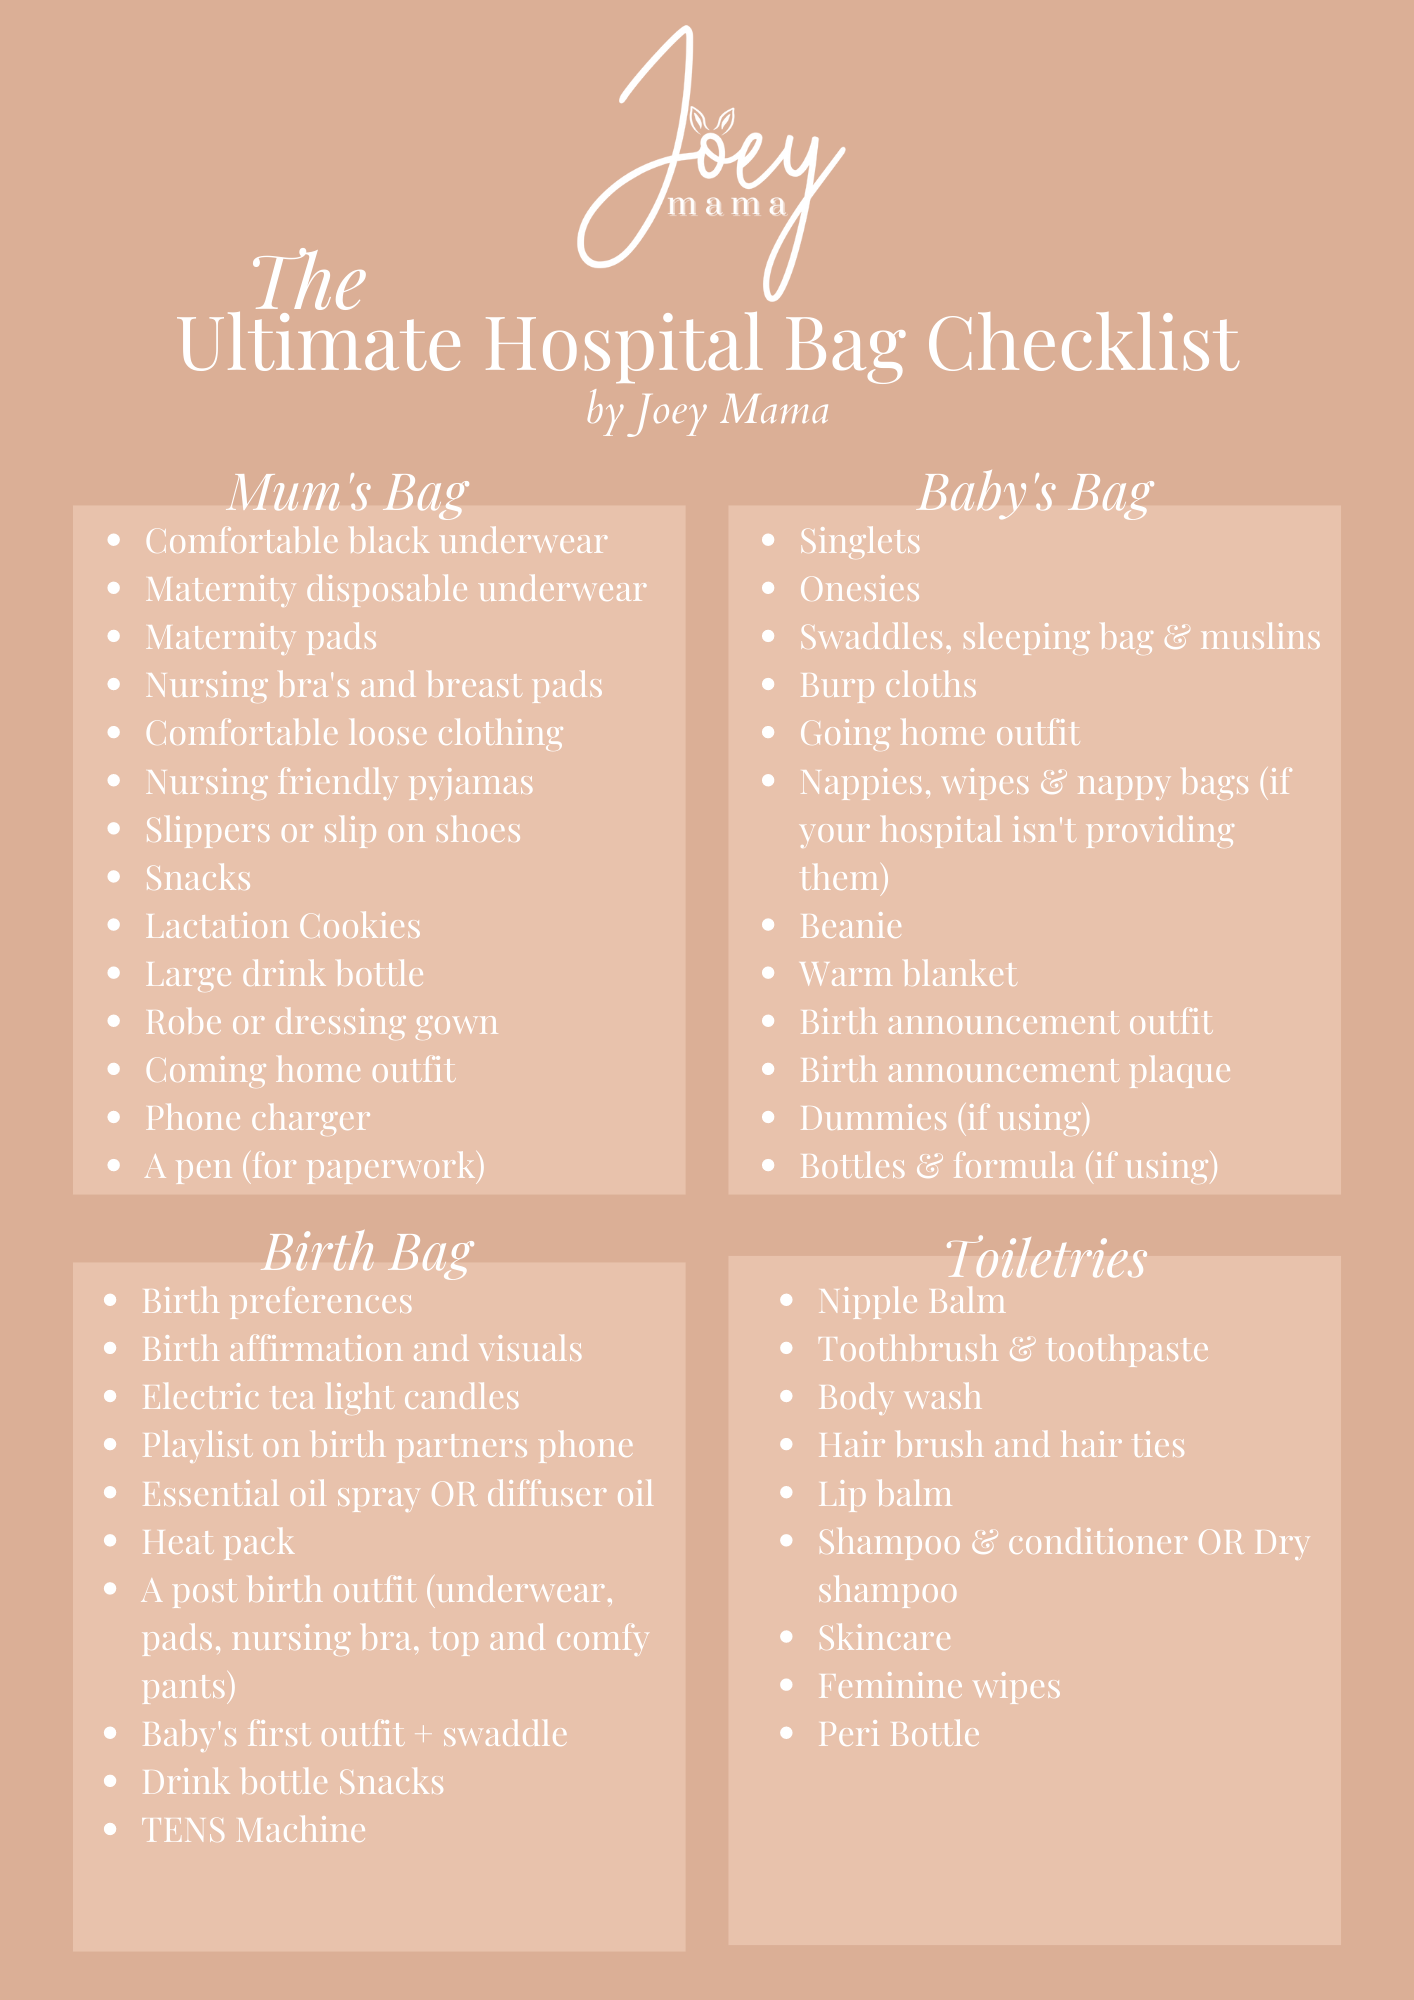 The Ultimate Hospital Bag Checklist